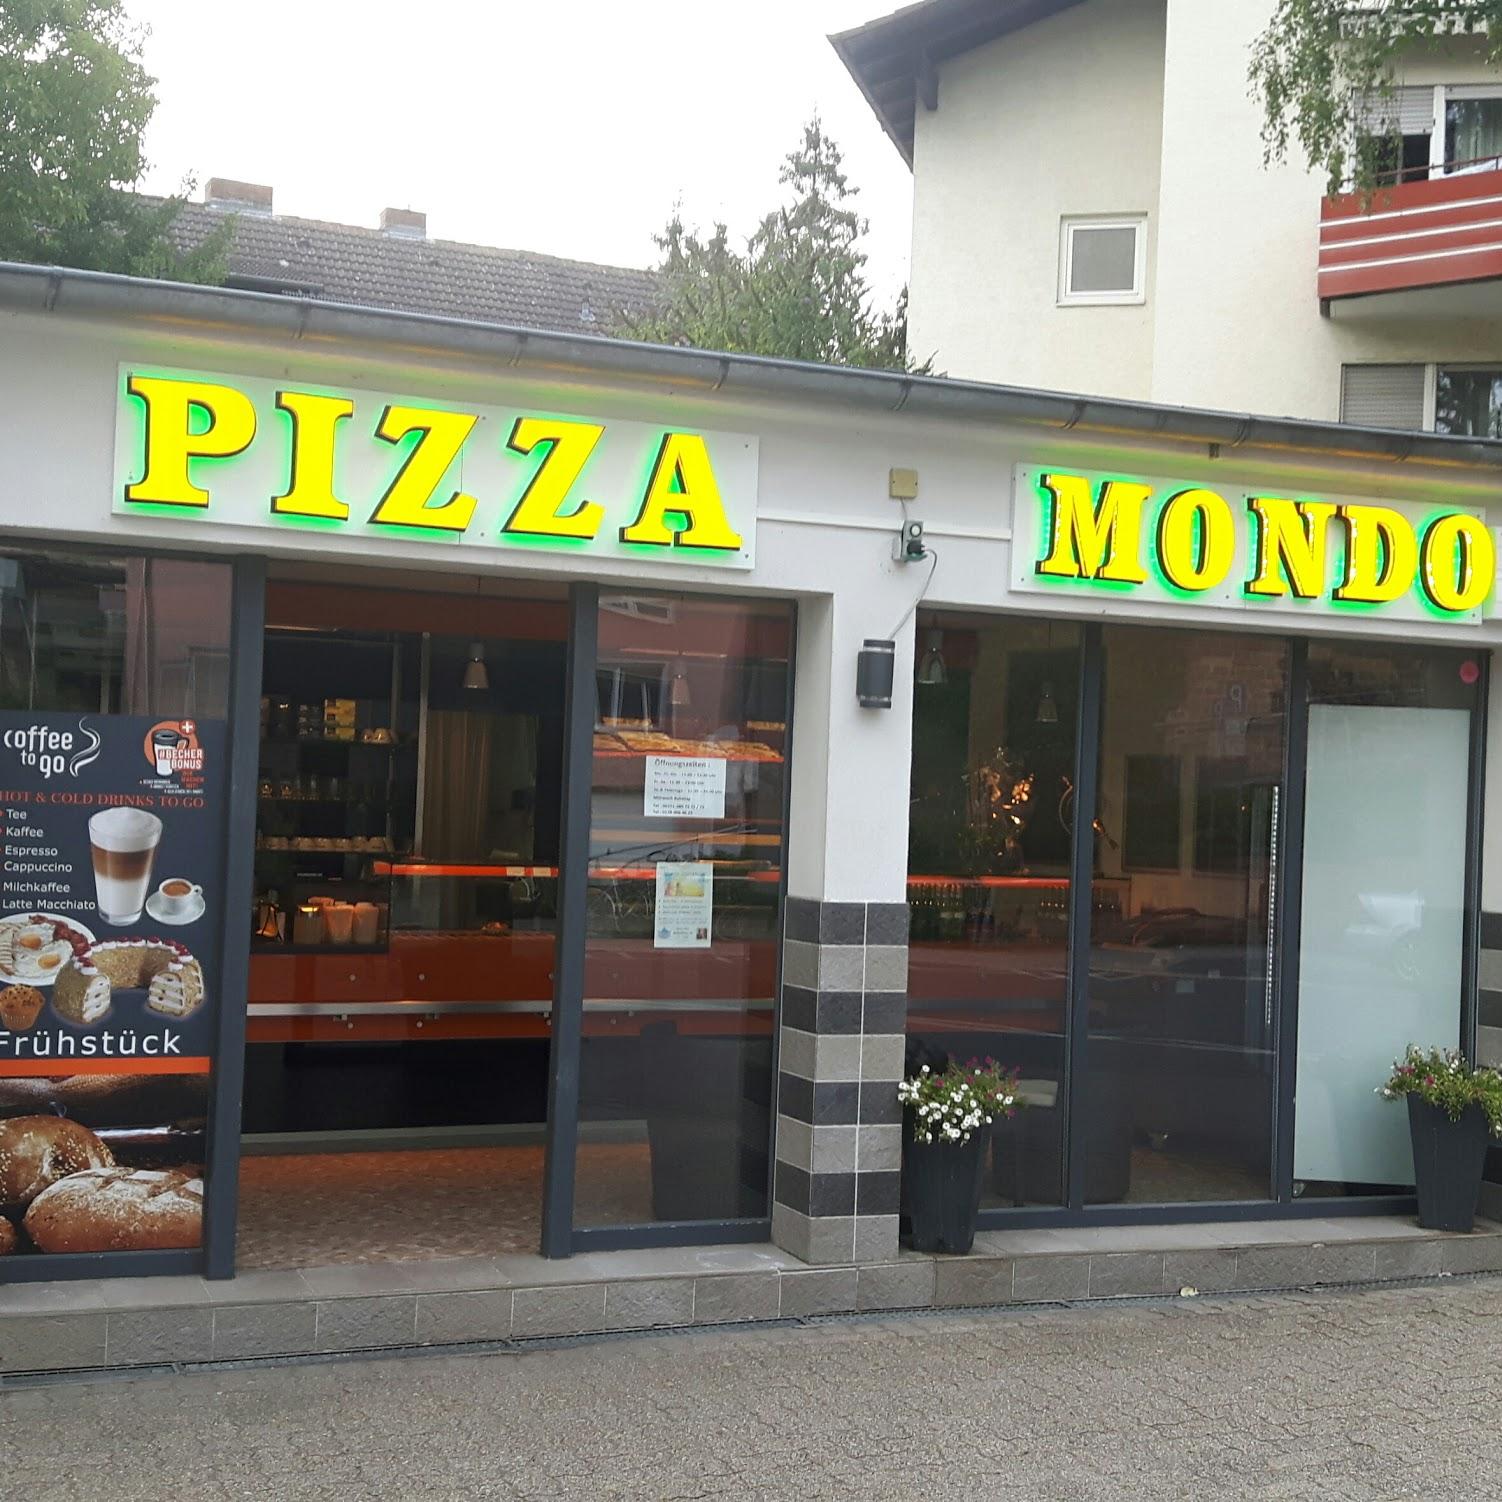 Restaurant "Pizza MONDO" in Heidelberg